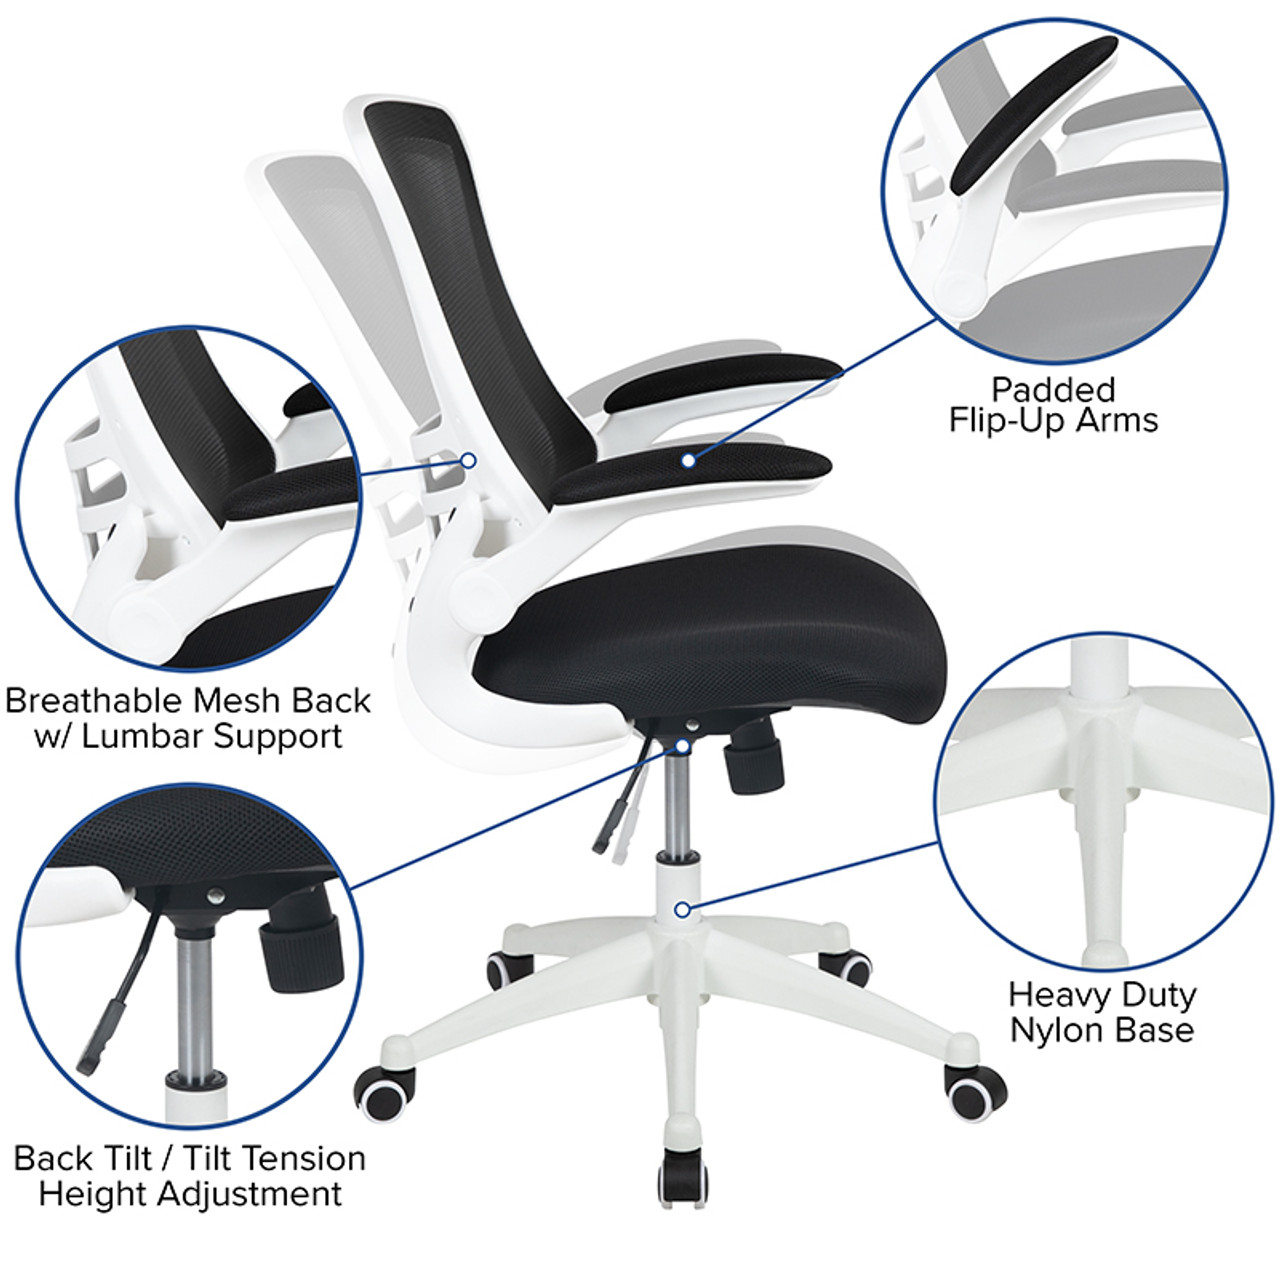 Flash Furniture Ergonomic Mesh Office Desk Chair in Black